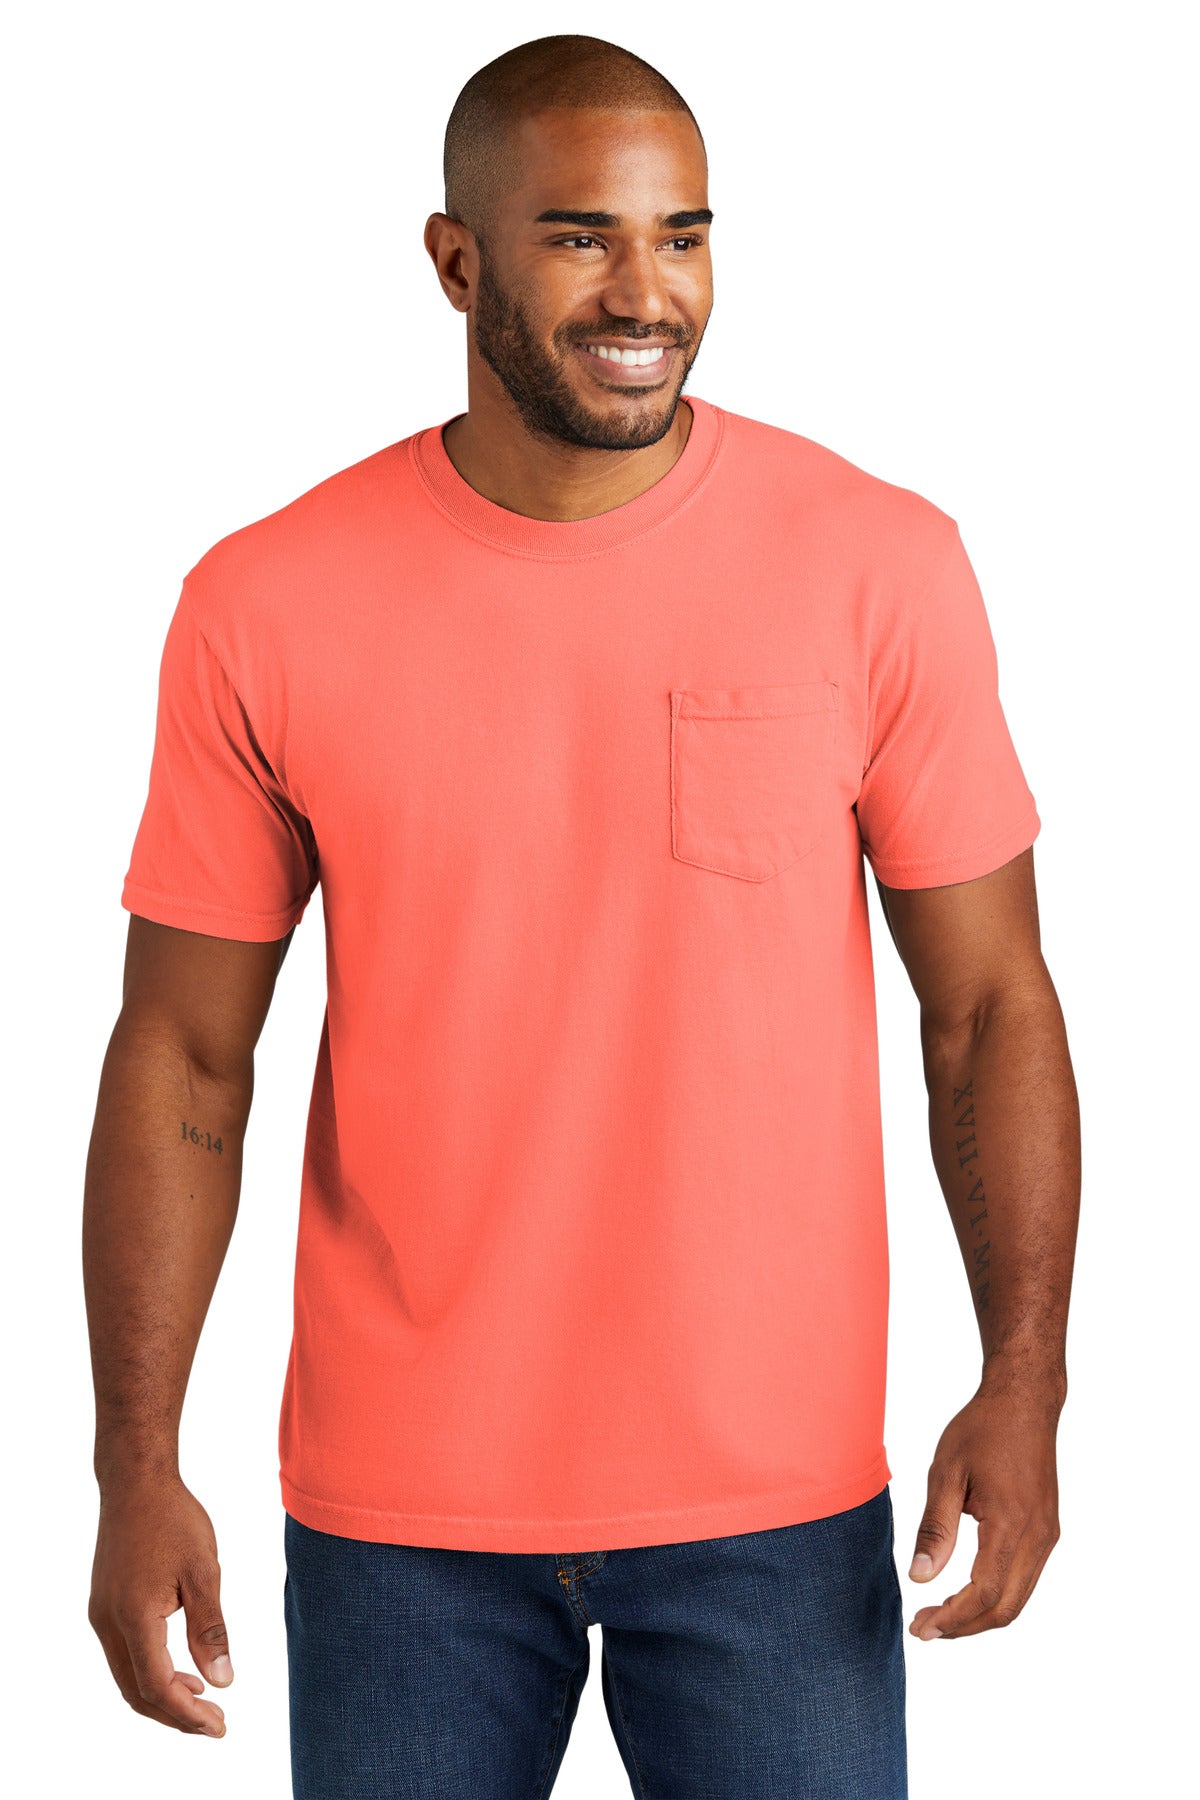 T-Shirts Neon Red Orange Comfort Colors